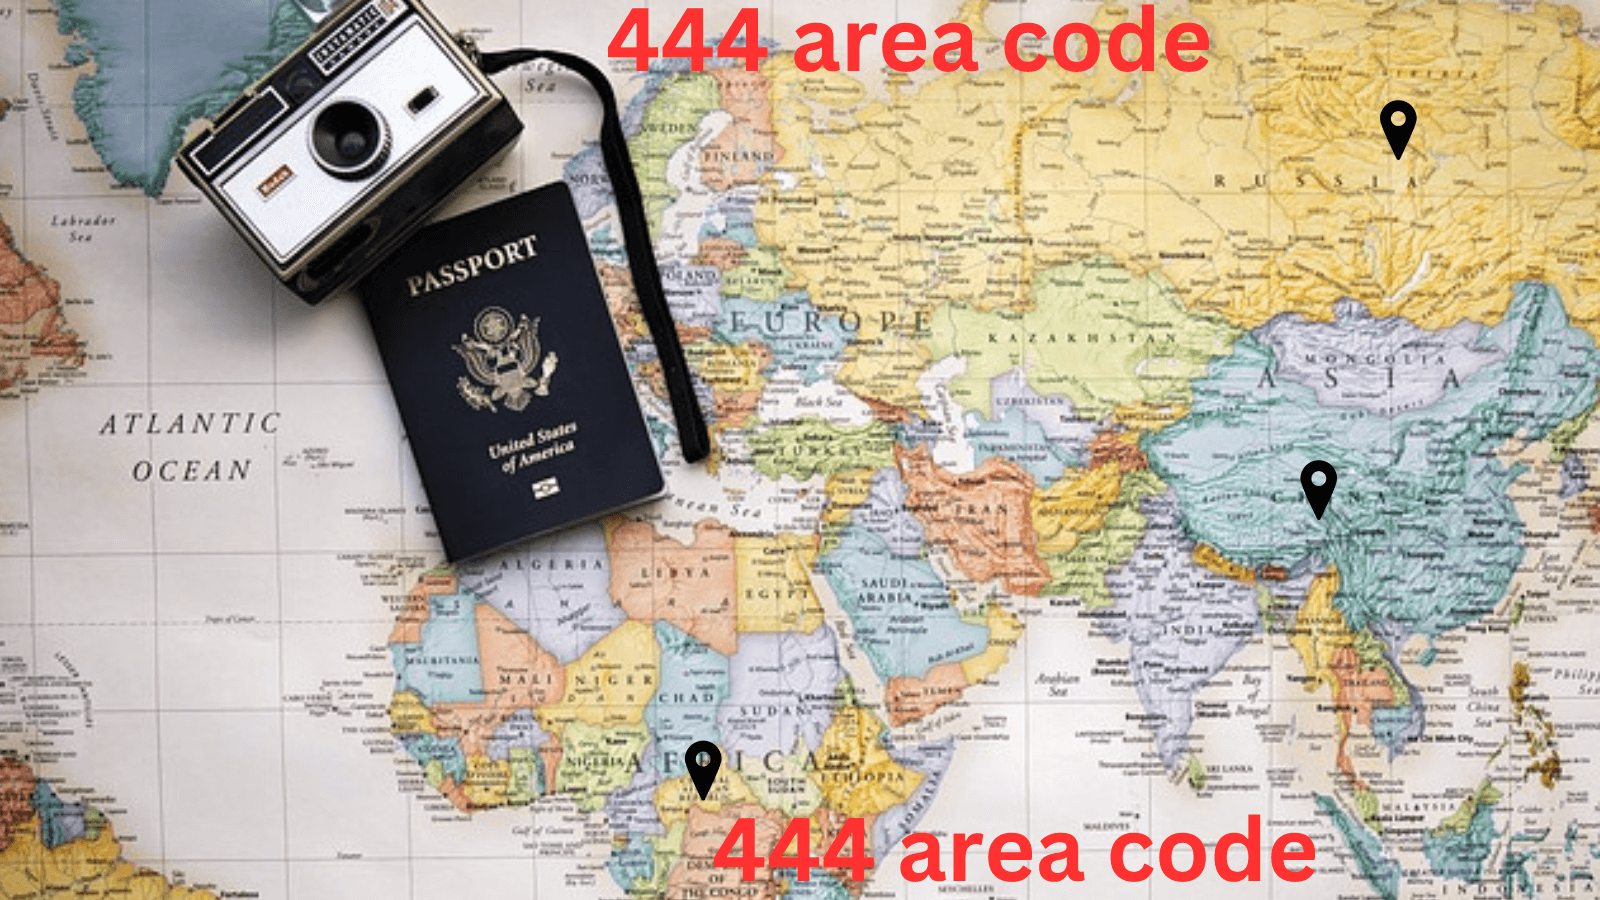 444 area code